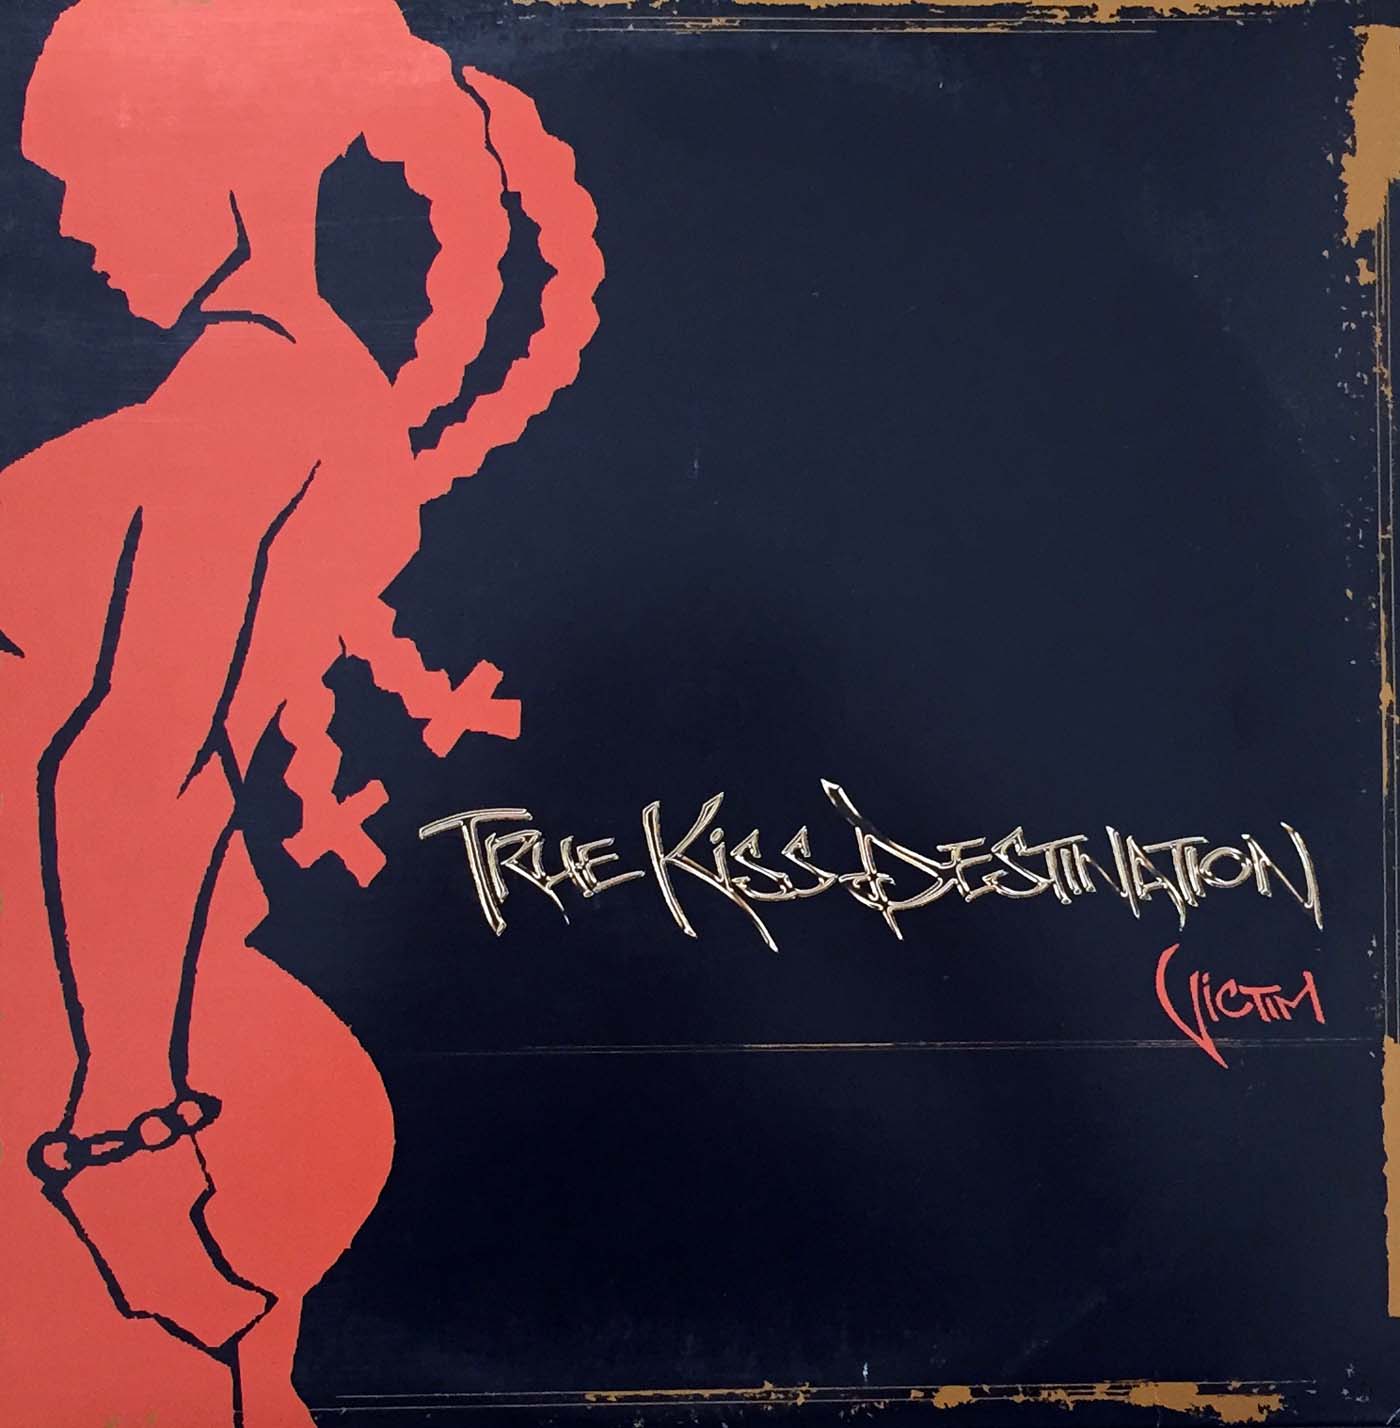 TRUE KISS DESTINATION / VICTIM